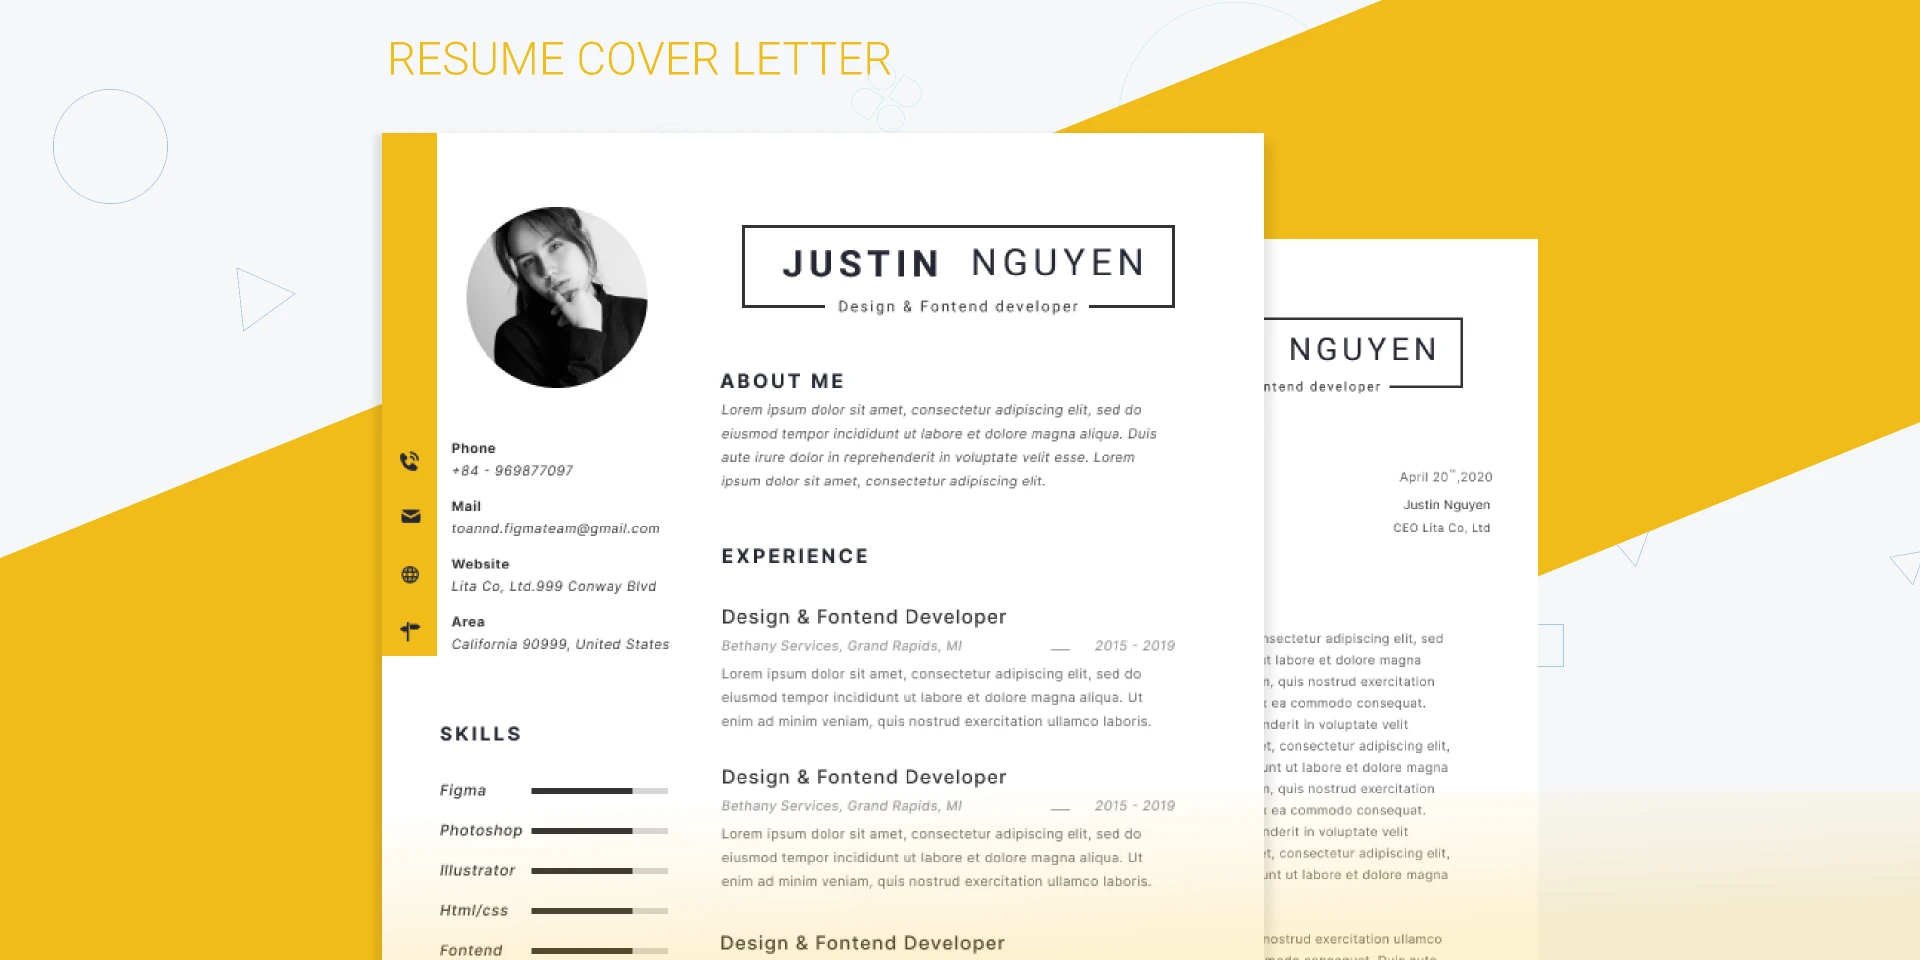 Resume CV for Figma and Adobe XD